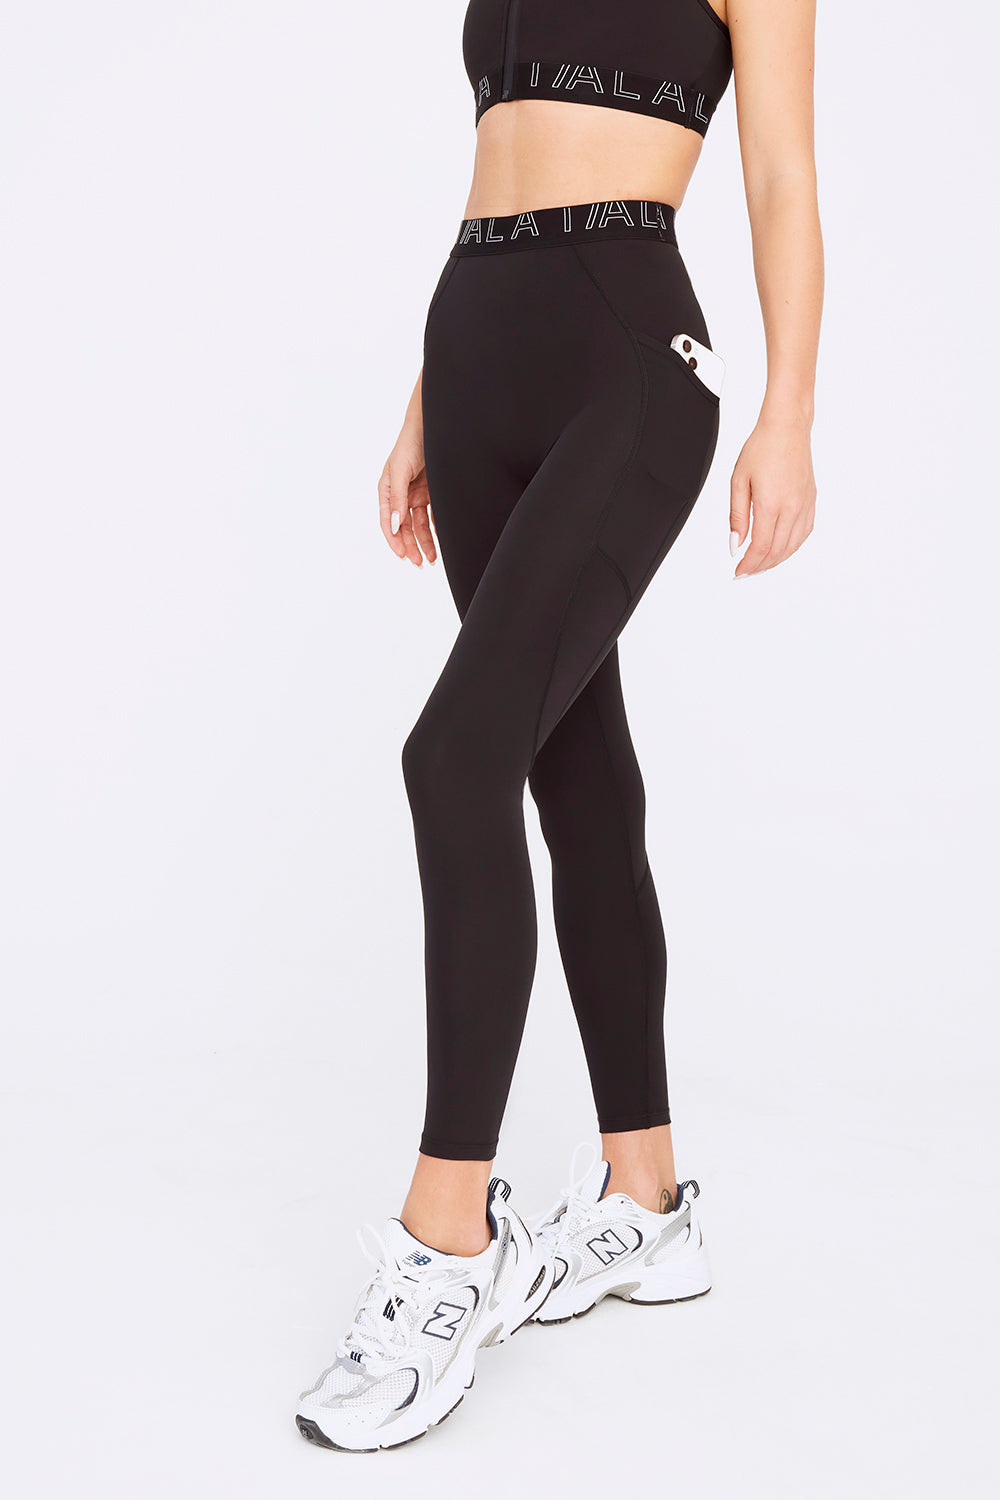 Calvin Klein Women's Performance Logo Leggings Black Size 7-8 – Steals